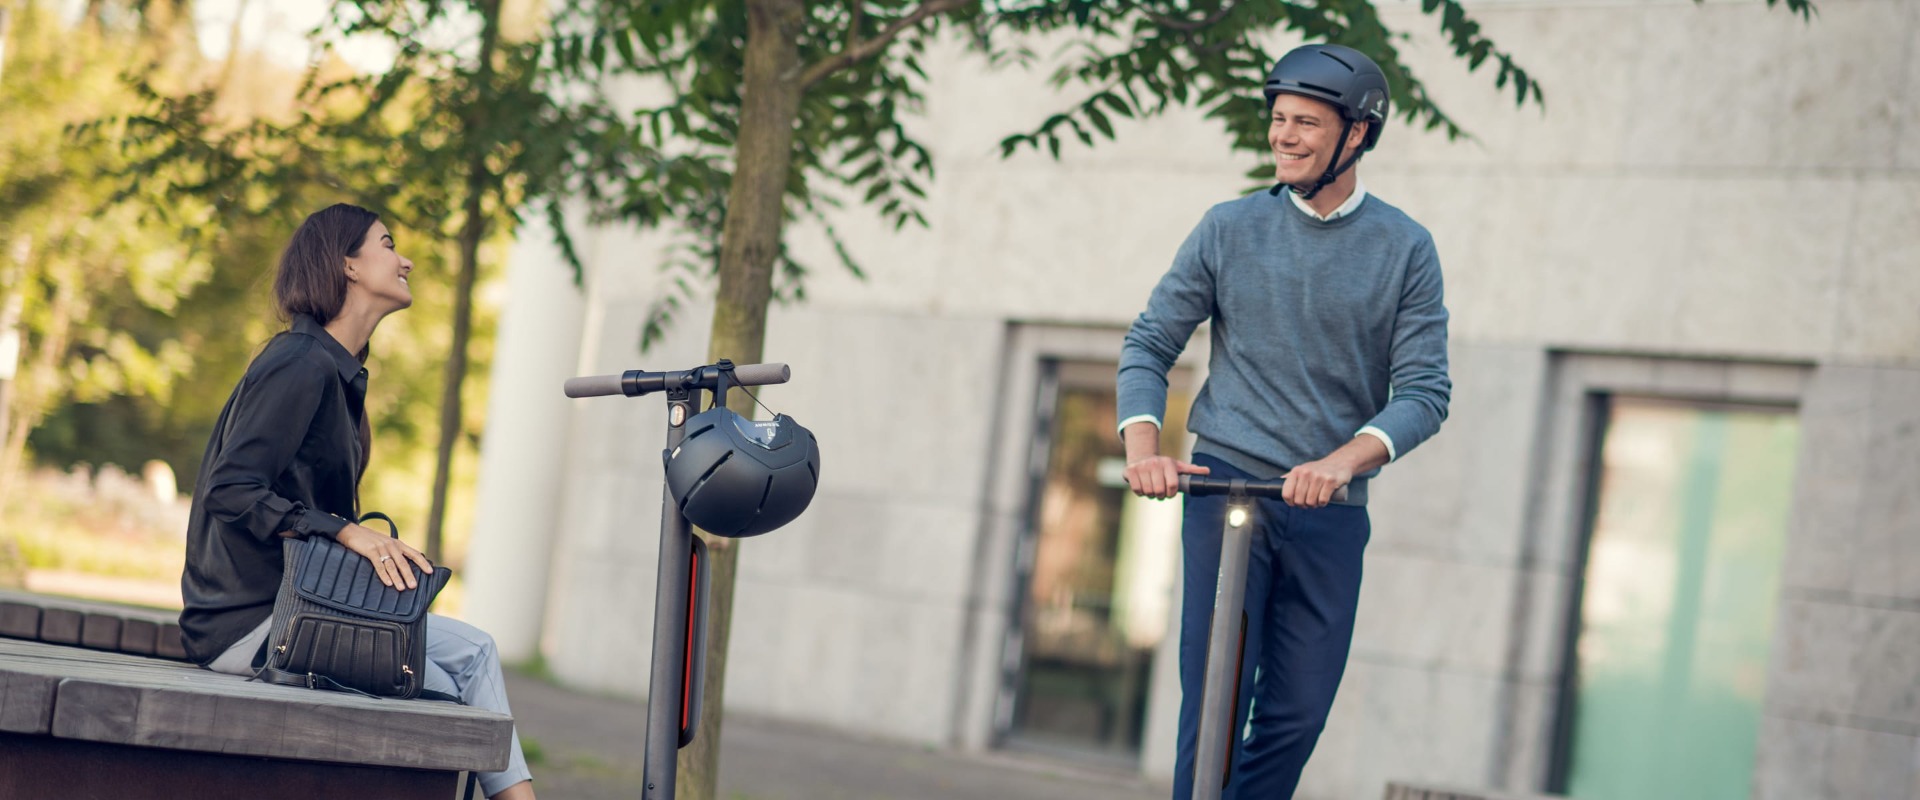 Man enjoying riding a Segway electric scooter